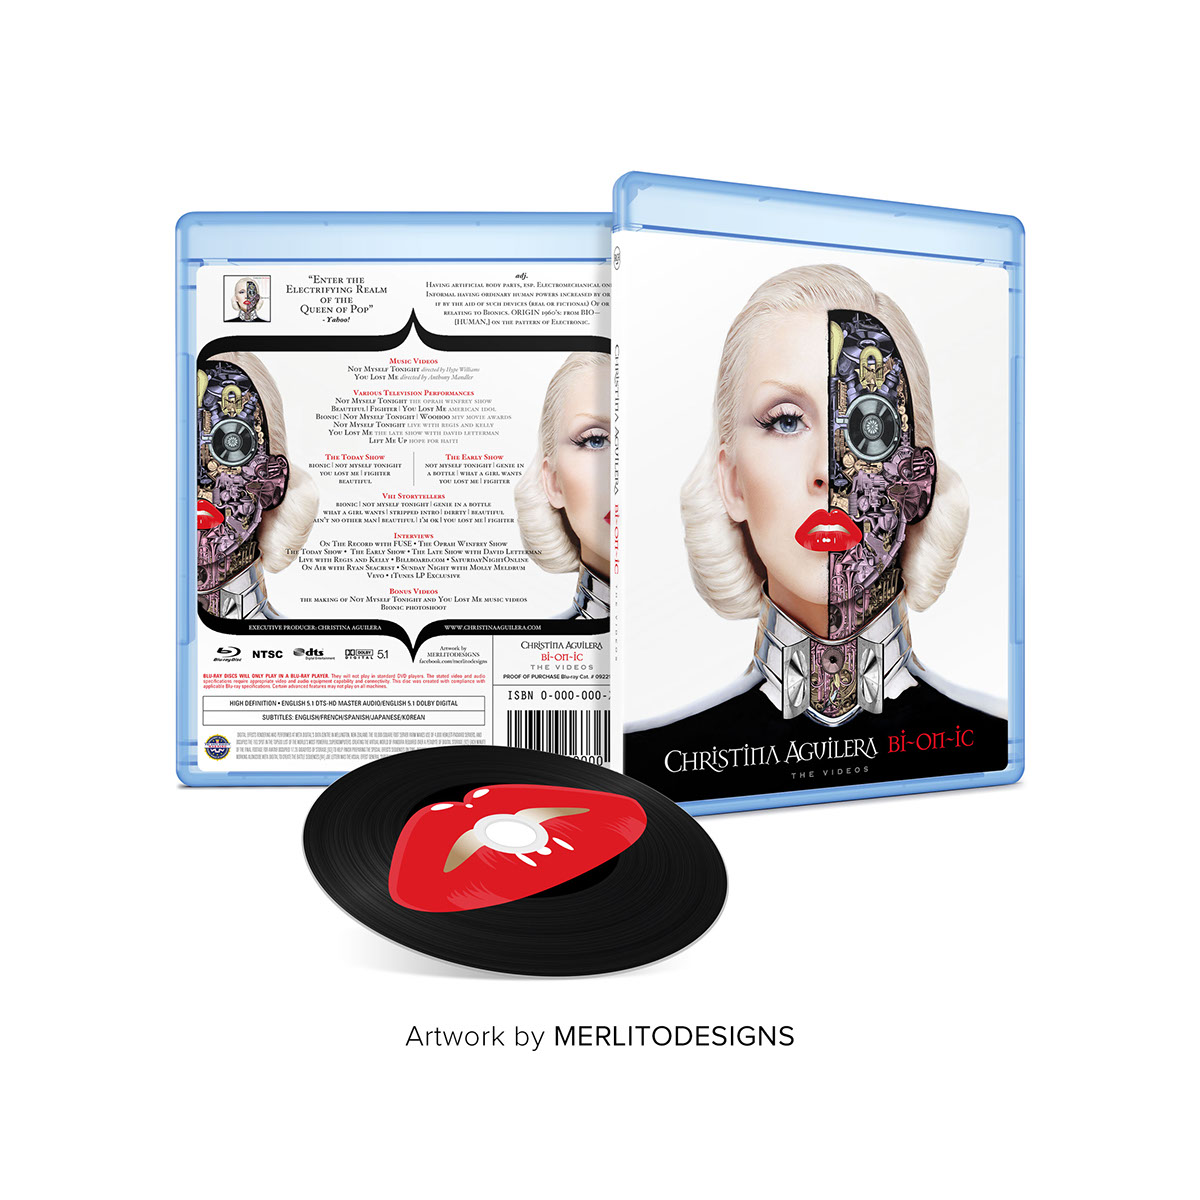 Christina Aguilera xtina Bionic dvd cover DVD bluray bluray cover  disc